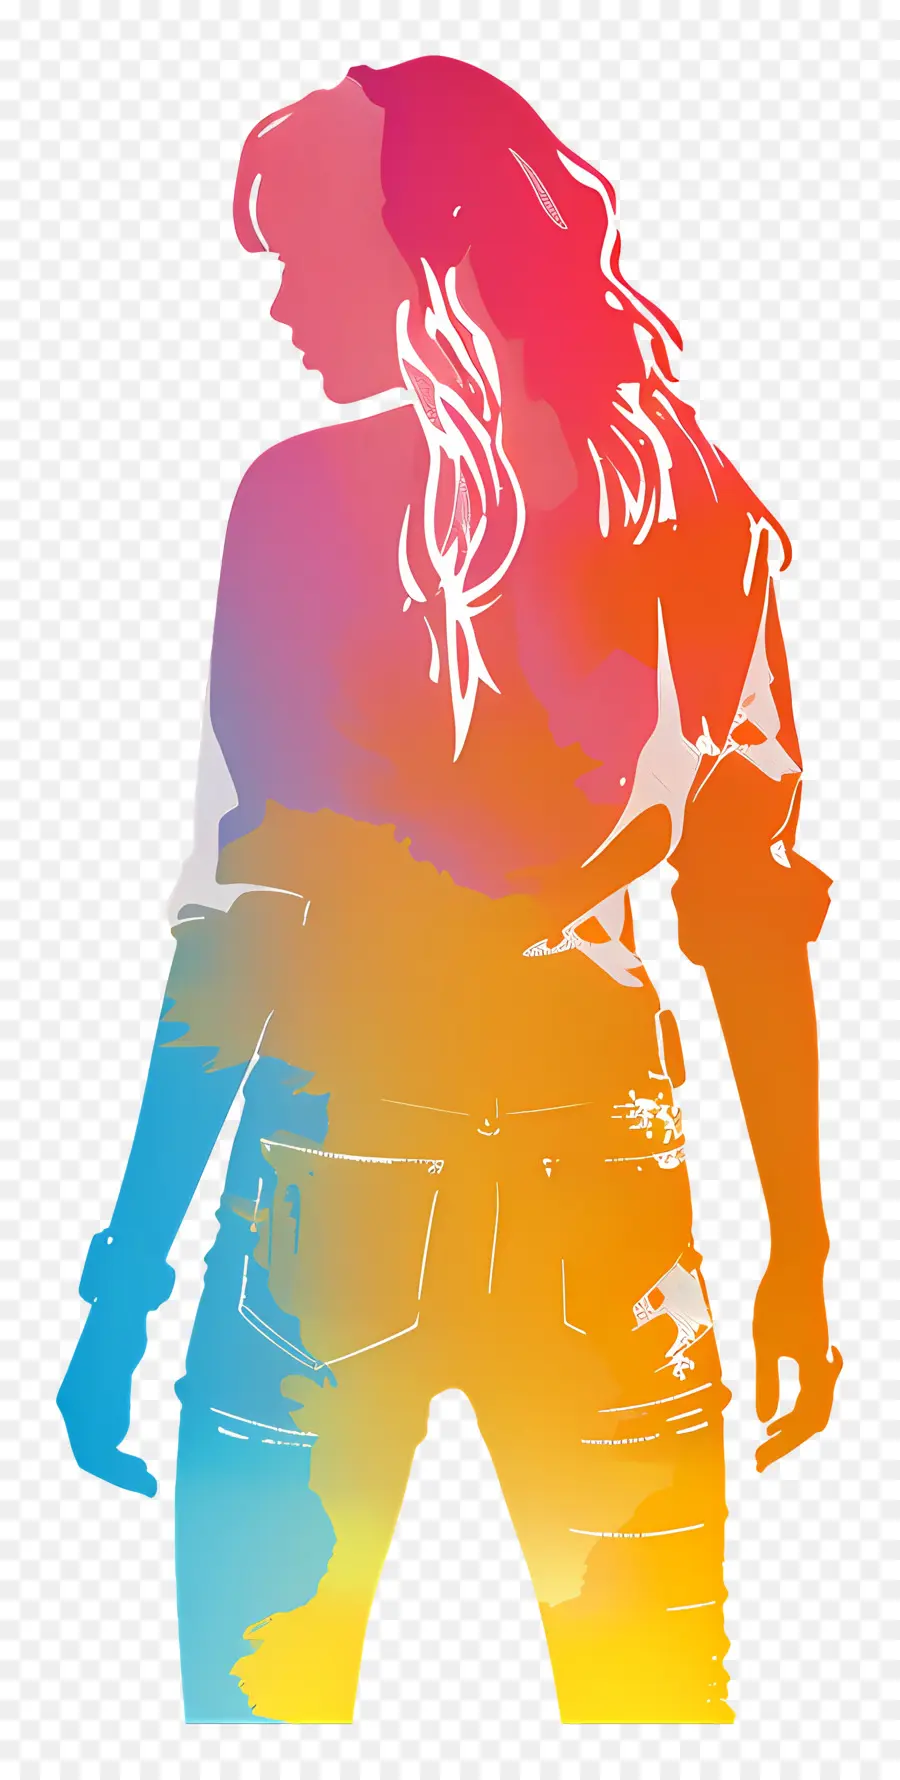 decal taylor swift silhouette digital art woman silhouette vibrant colors profile portrait